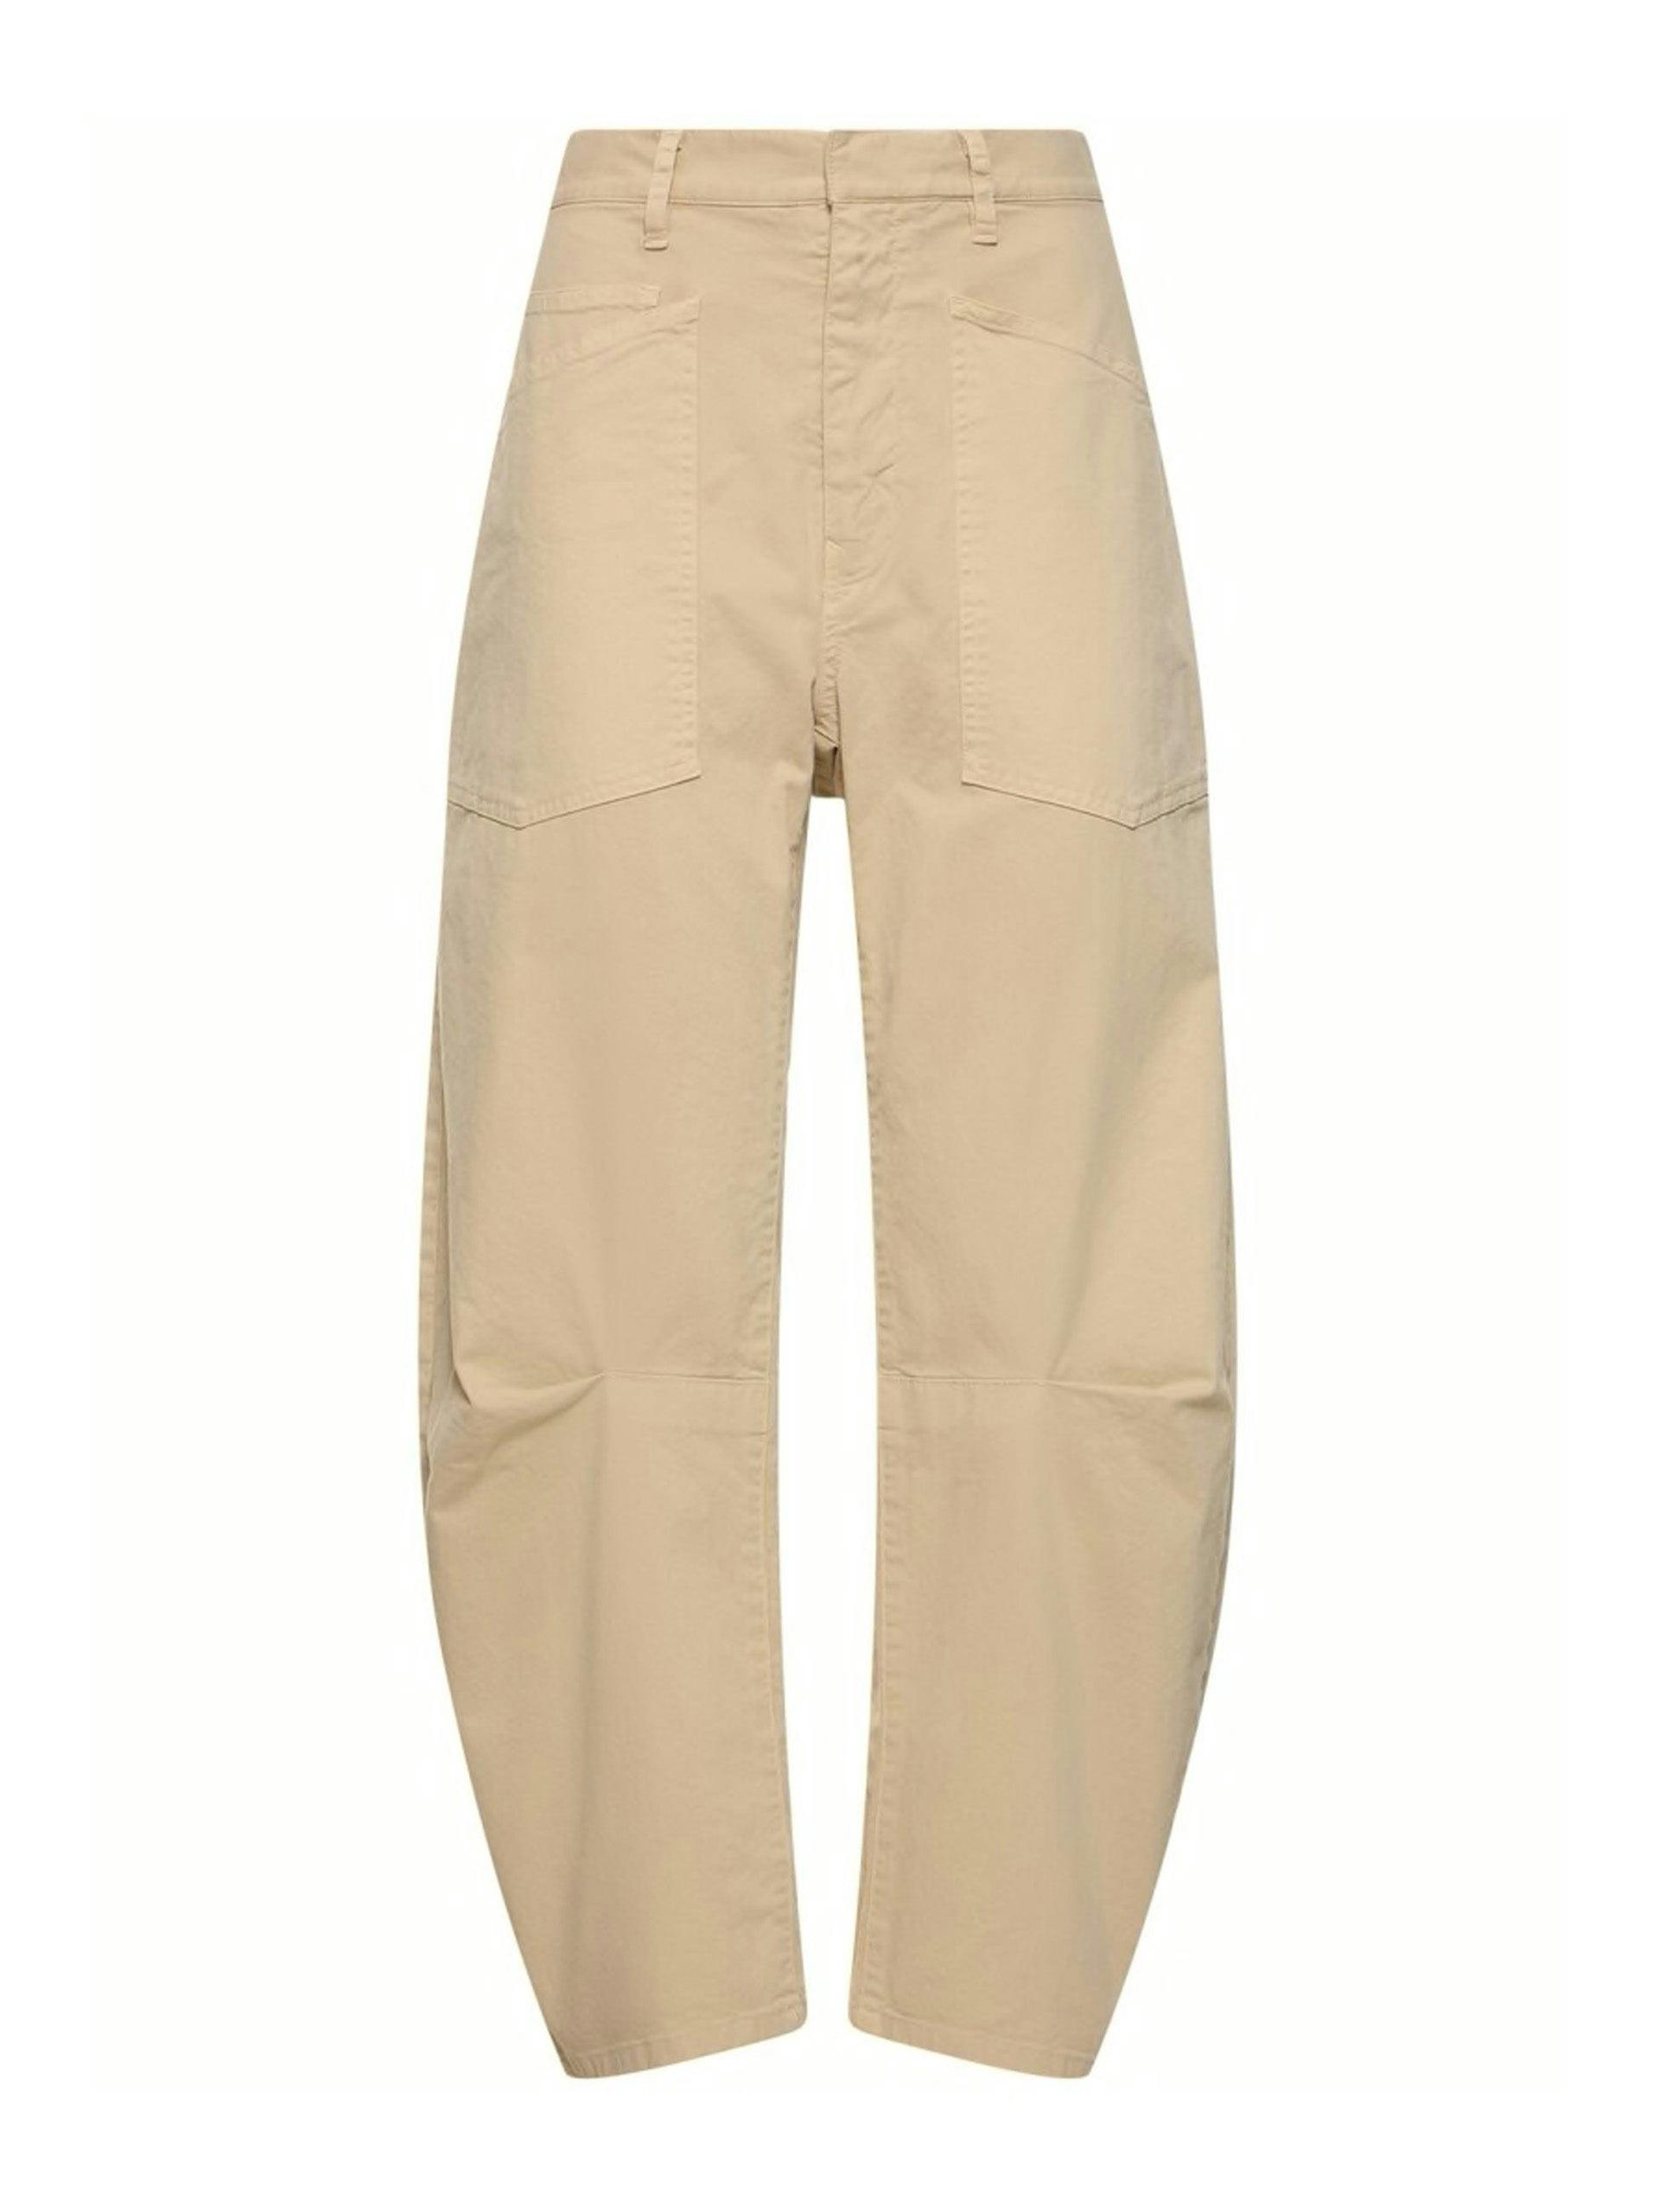 Shon tapered cotton pants